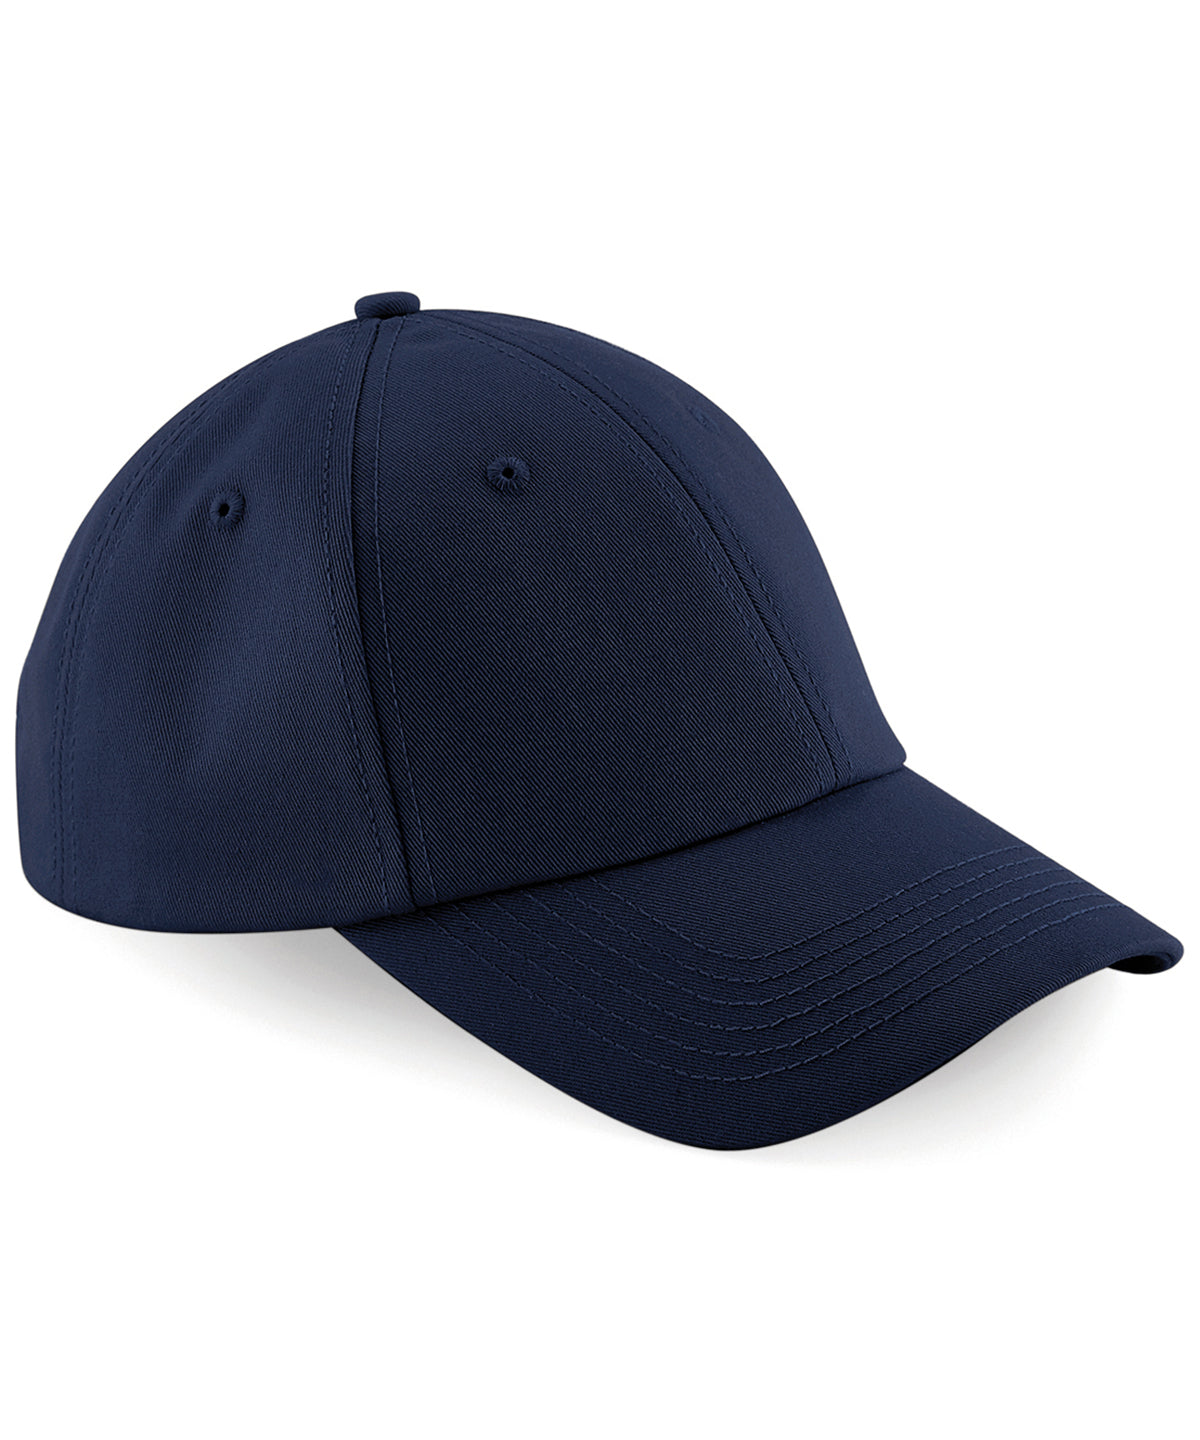 Personalised Caps - Navy Beechfield Authentic baseball cap